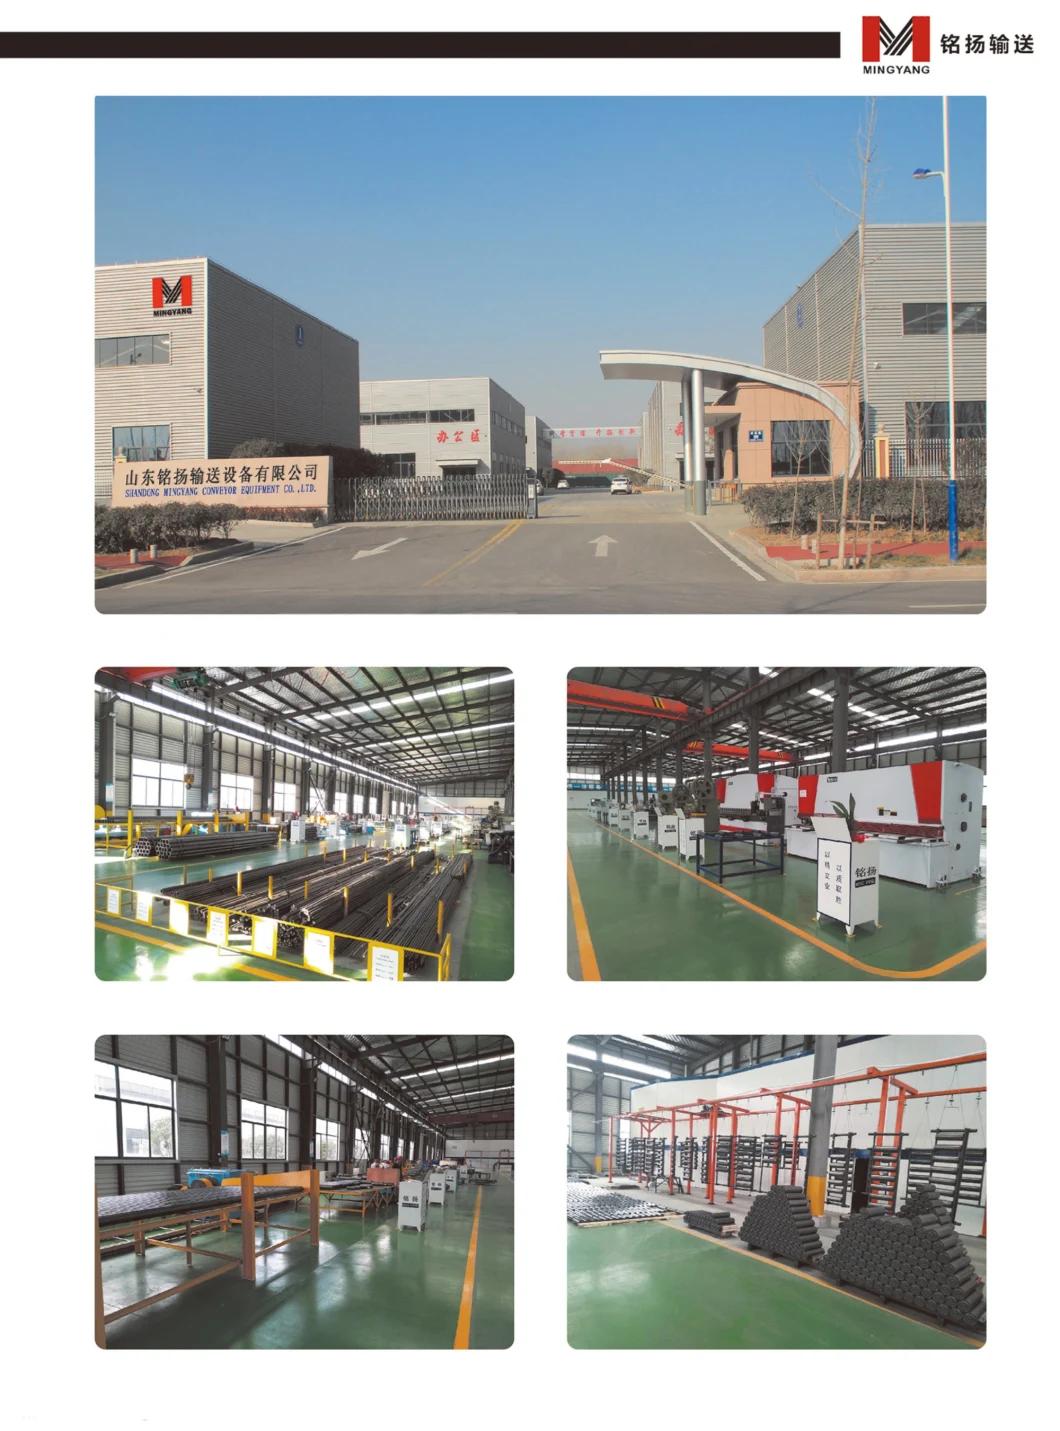 Professional China Manufacturer of HDPE Roller for Conveyor Belt System